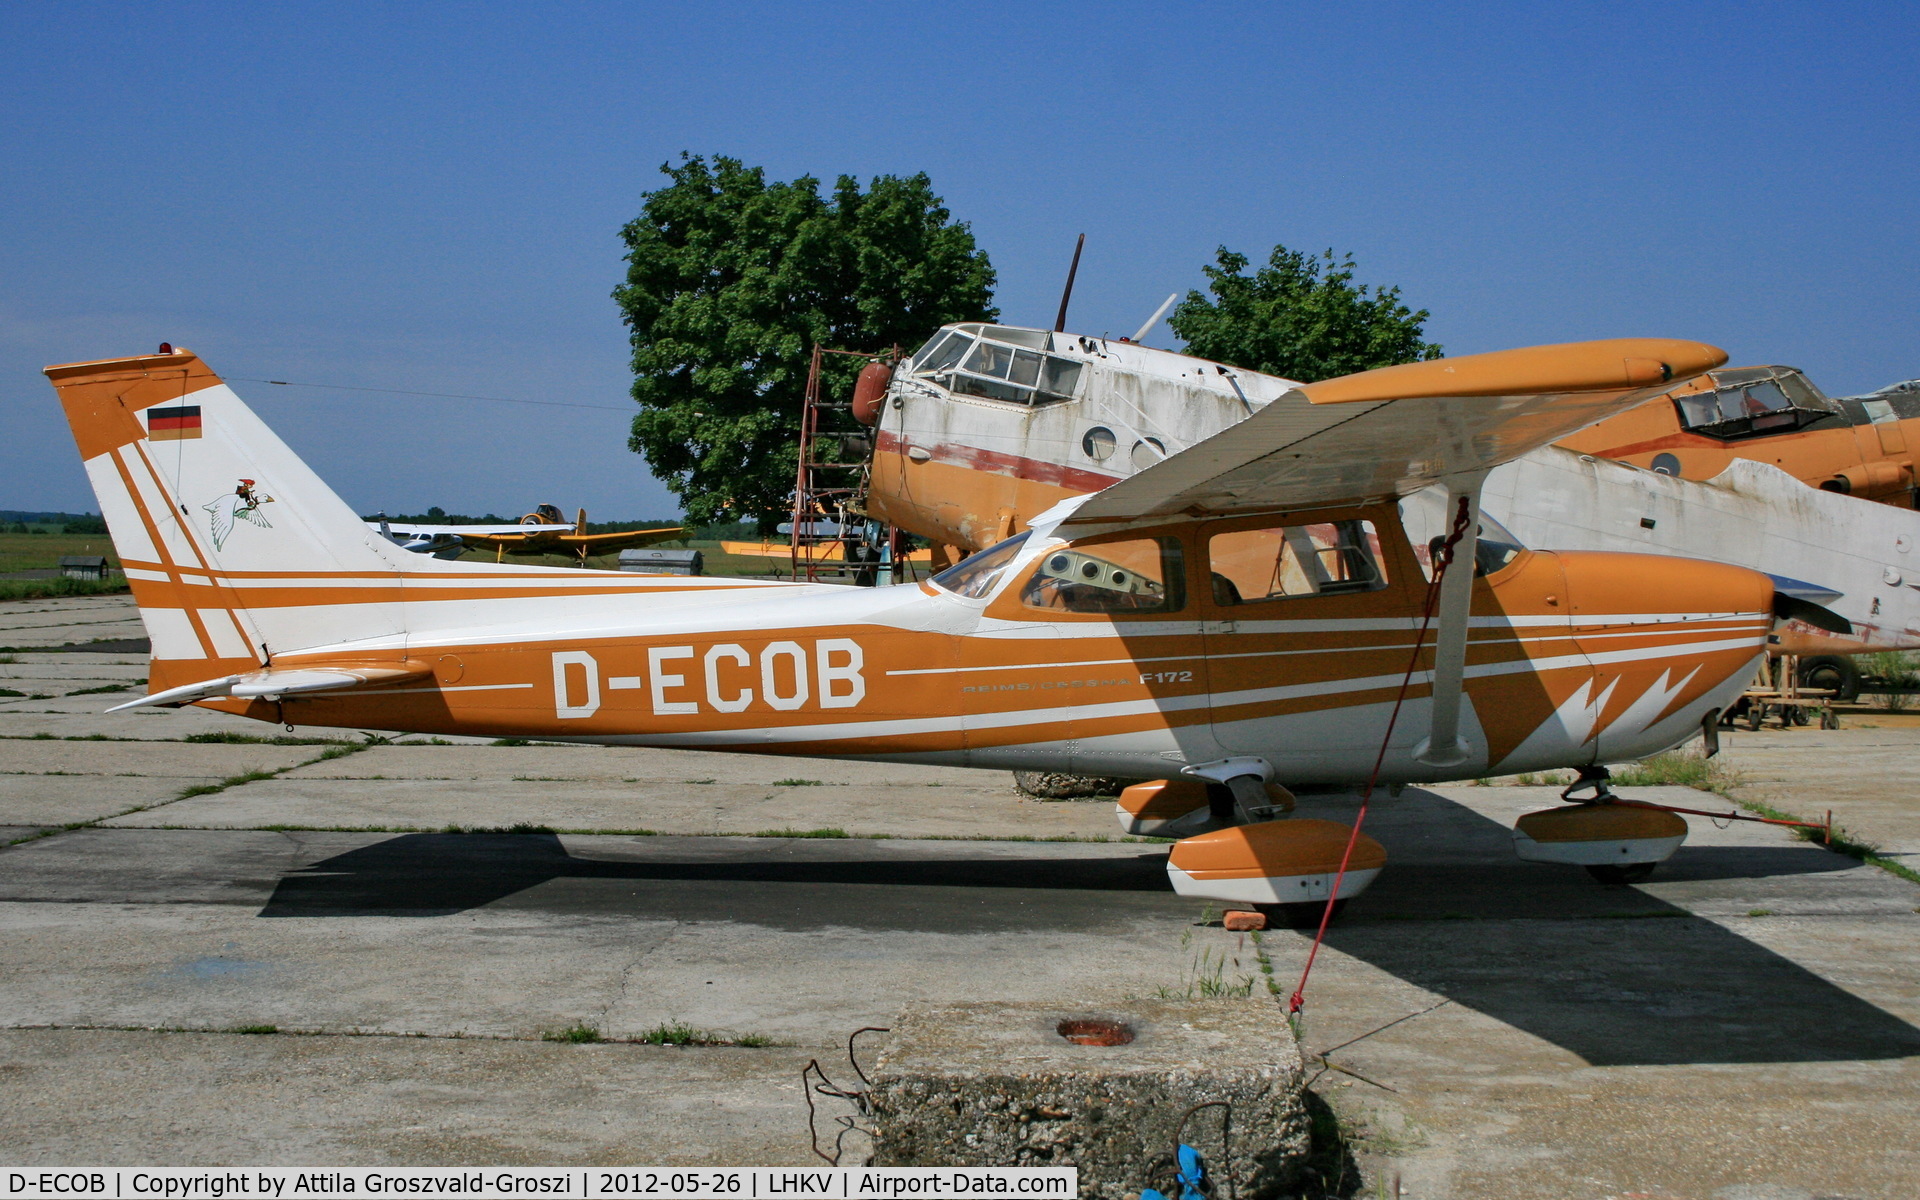 D-ECOB, 1971 Reims F172K Skyhawk C/N 0765, Kaposujlak Airport - Hungary